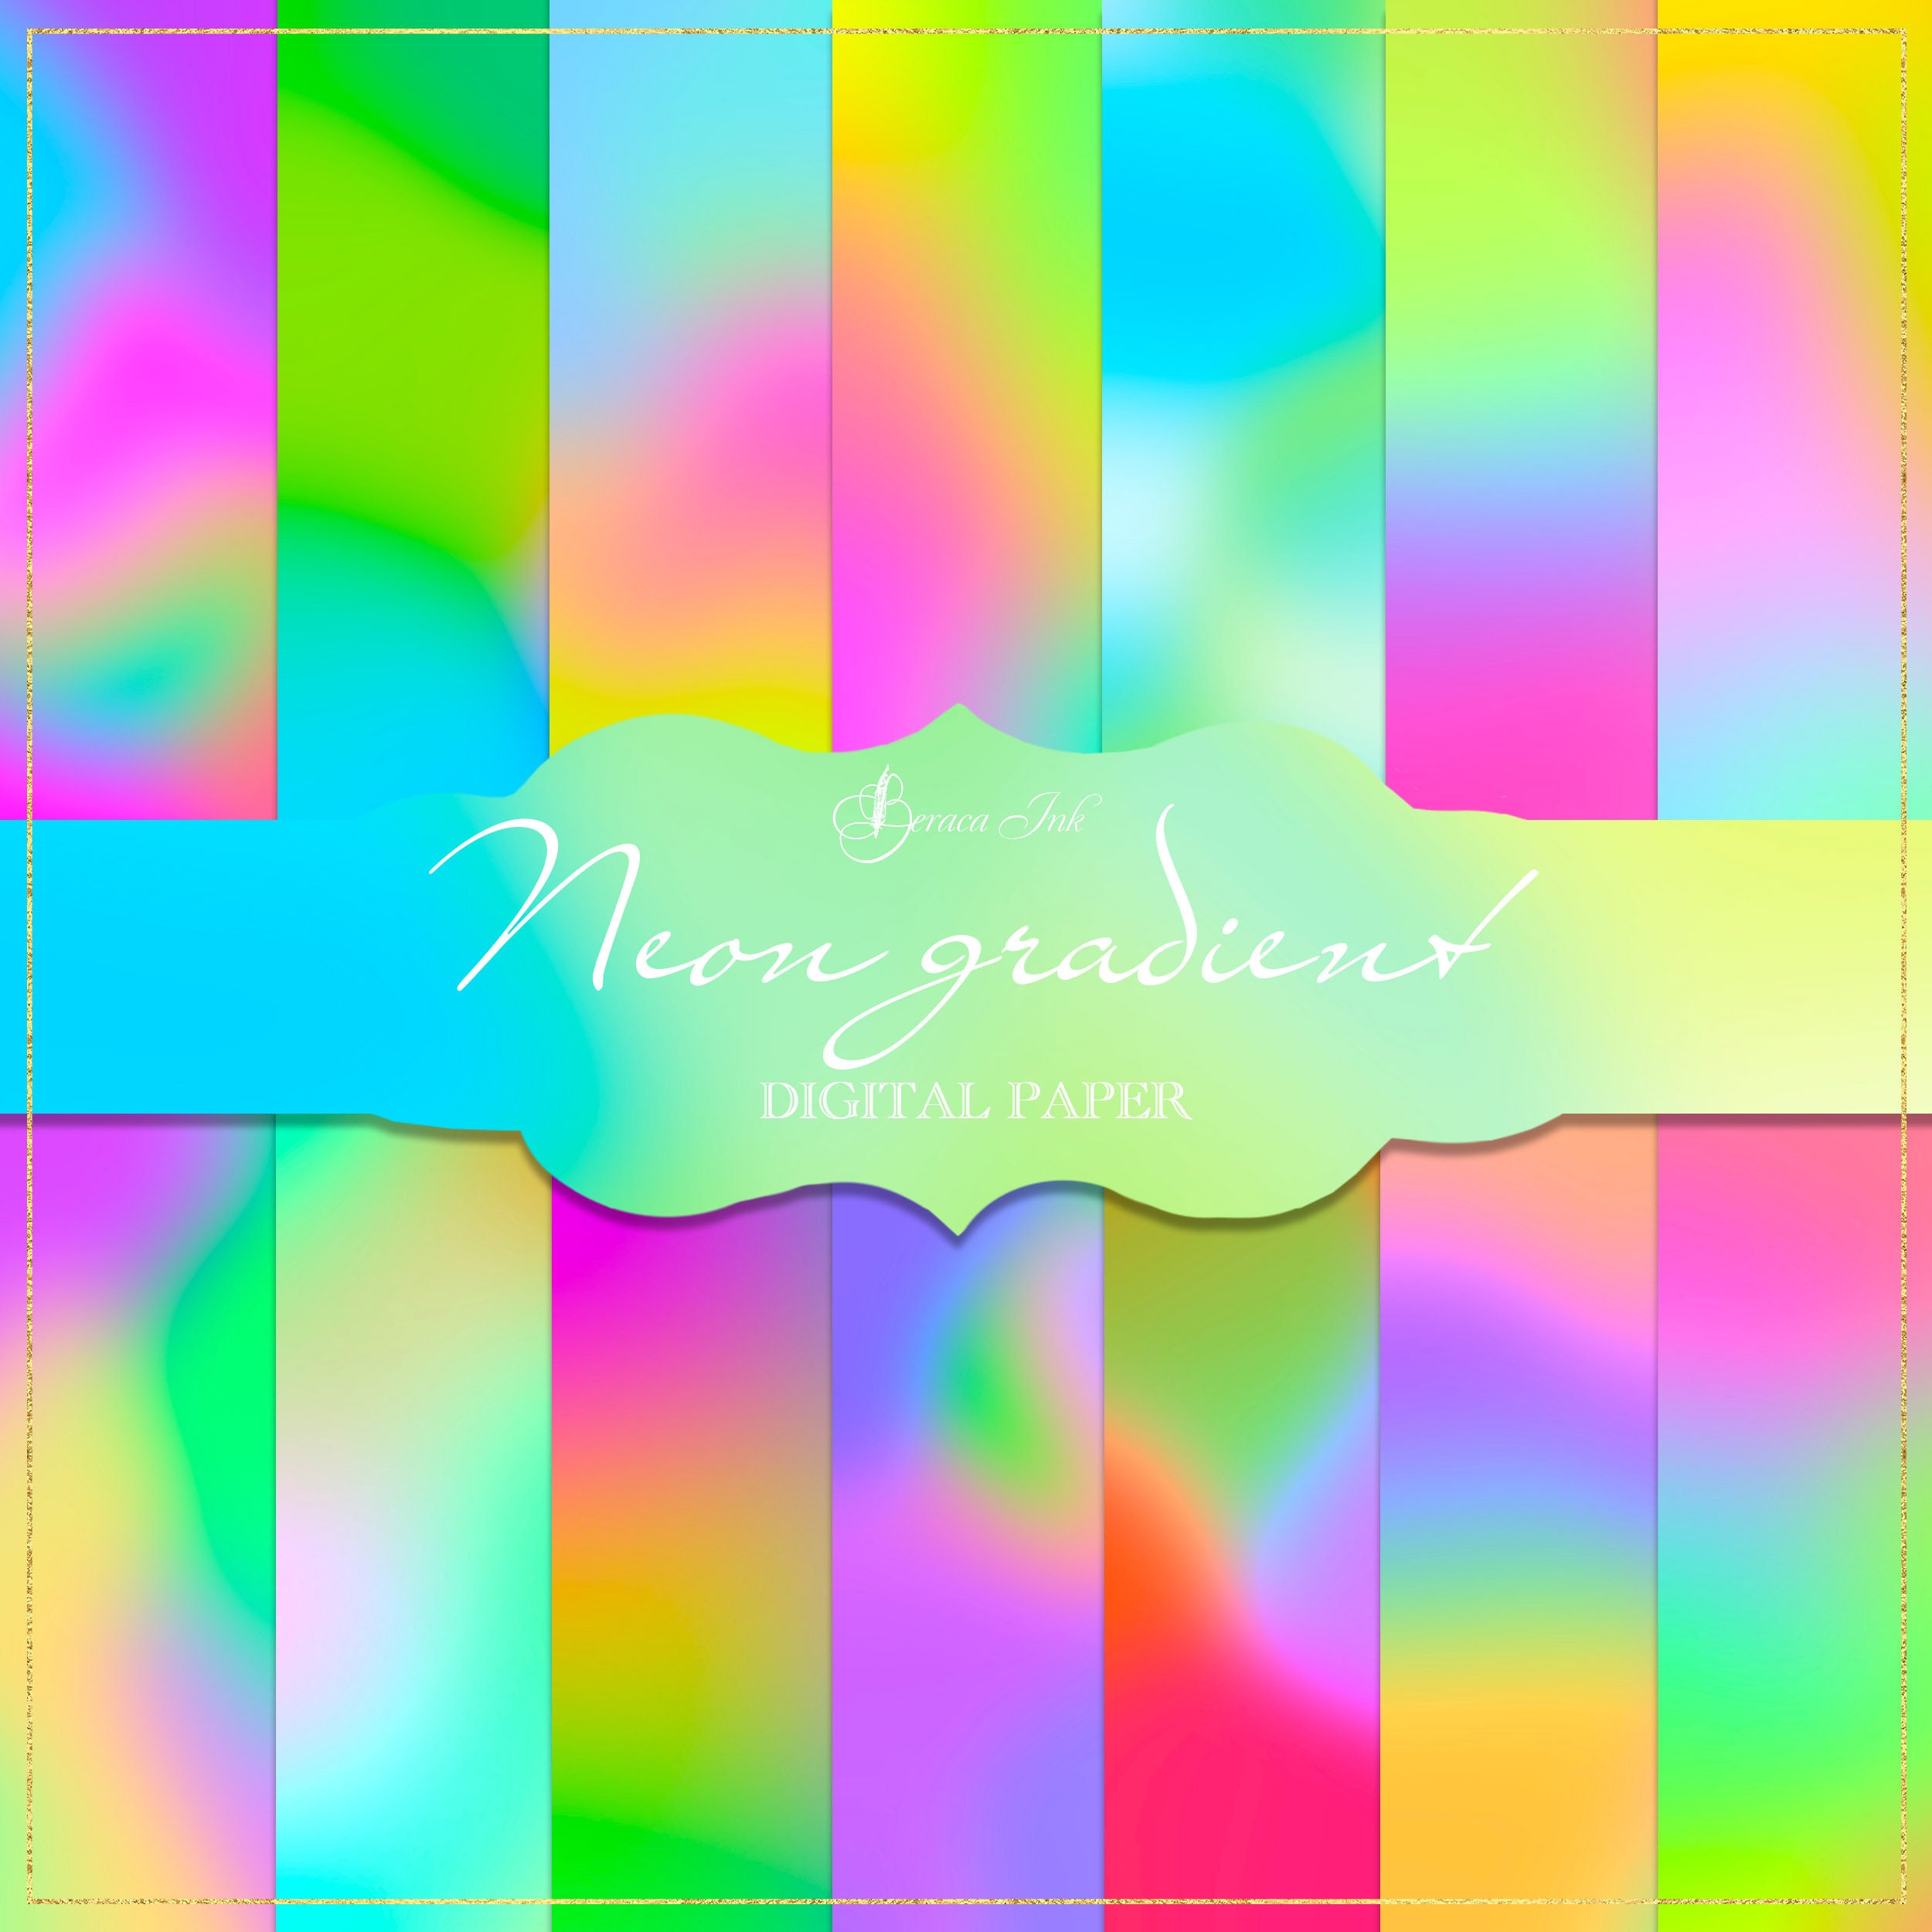 Rainbow Neon Paint Splatter Seamless Digital Paper Background Texture  Digital Download Files 